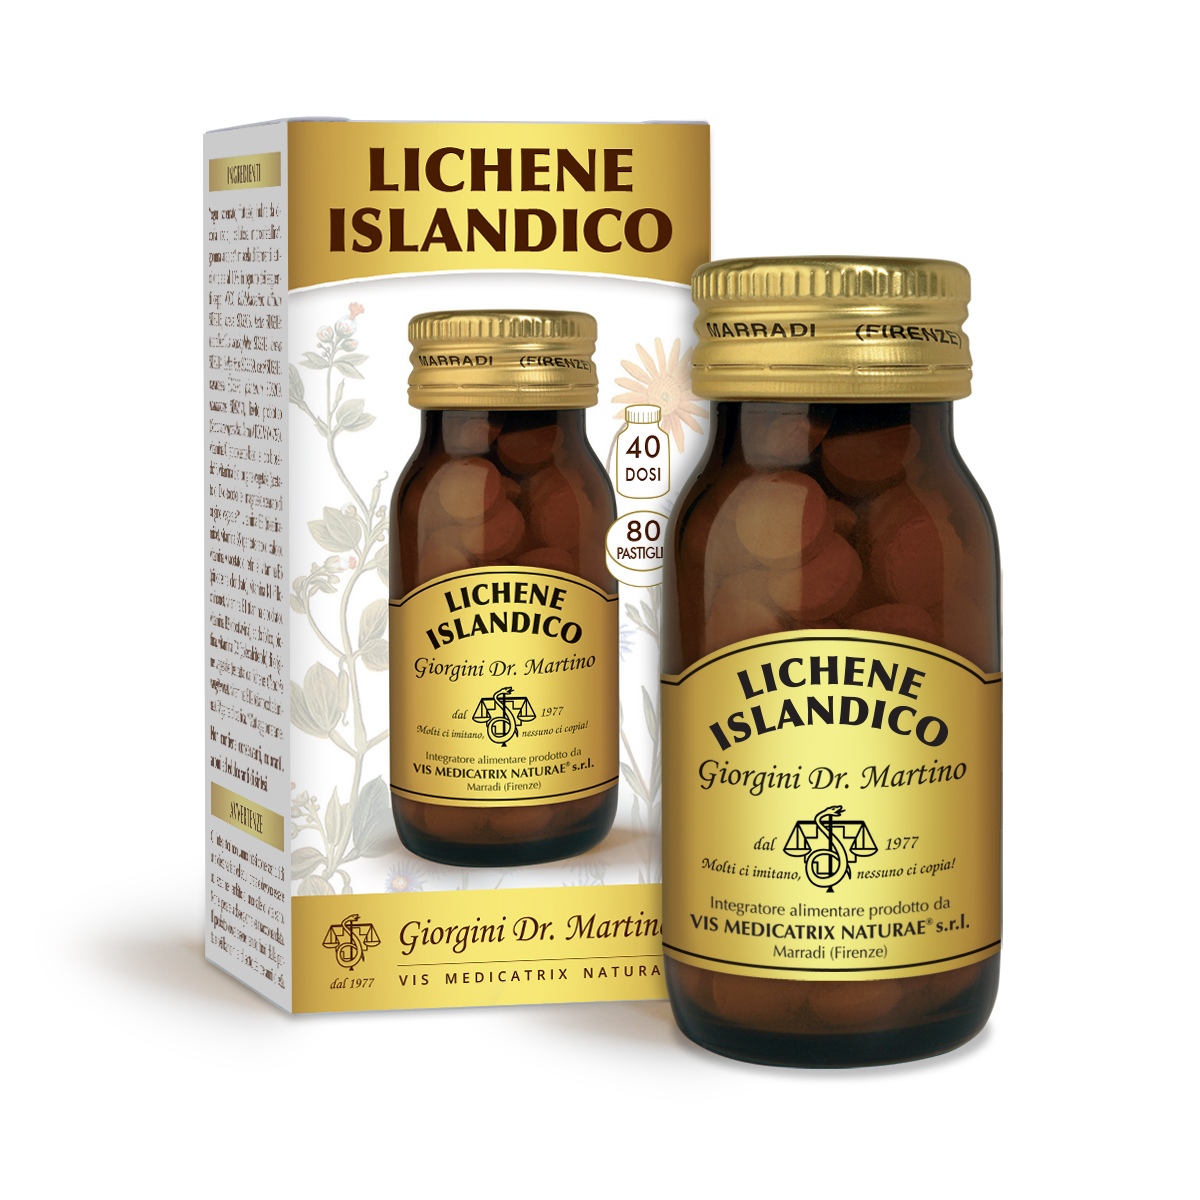 LICHENE ISLANDICO 80 pastiglieda 500 mg - 40 g